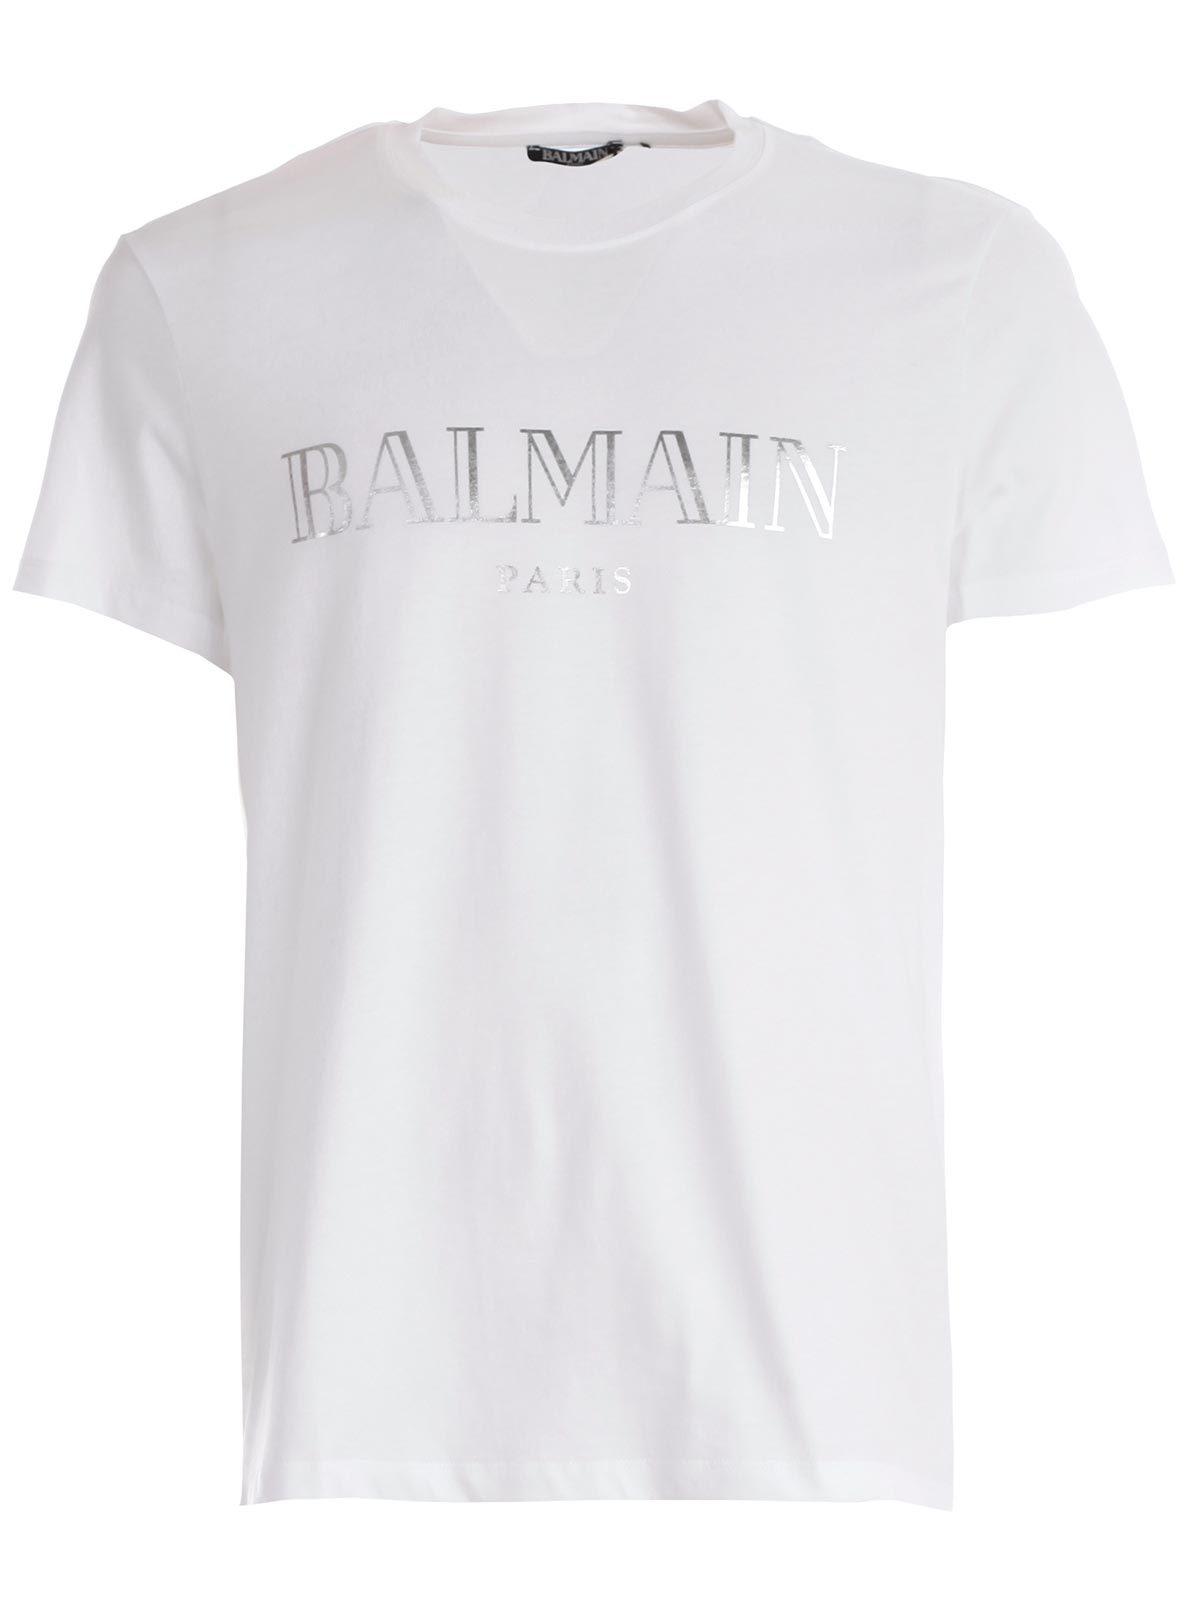 Balmain Cotton Paris Logo T-shirt in White for Men - Lyst